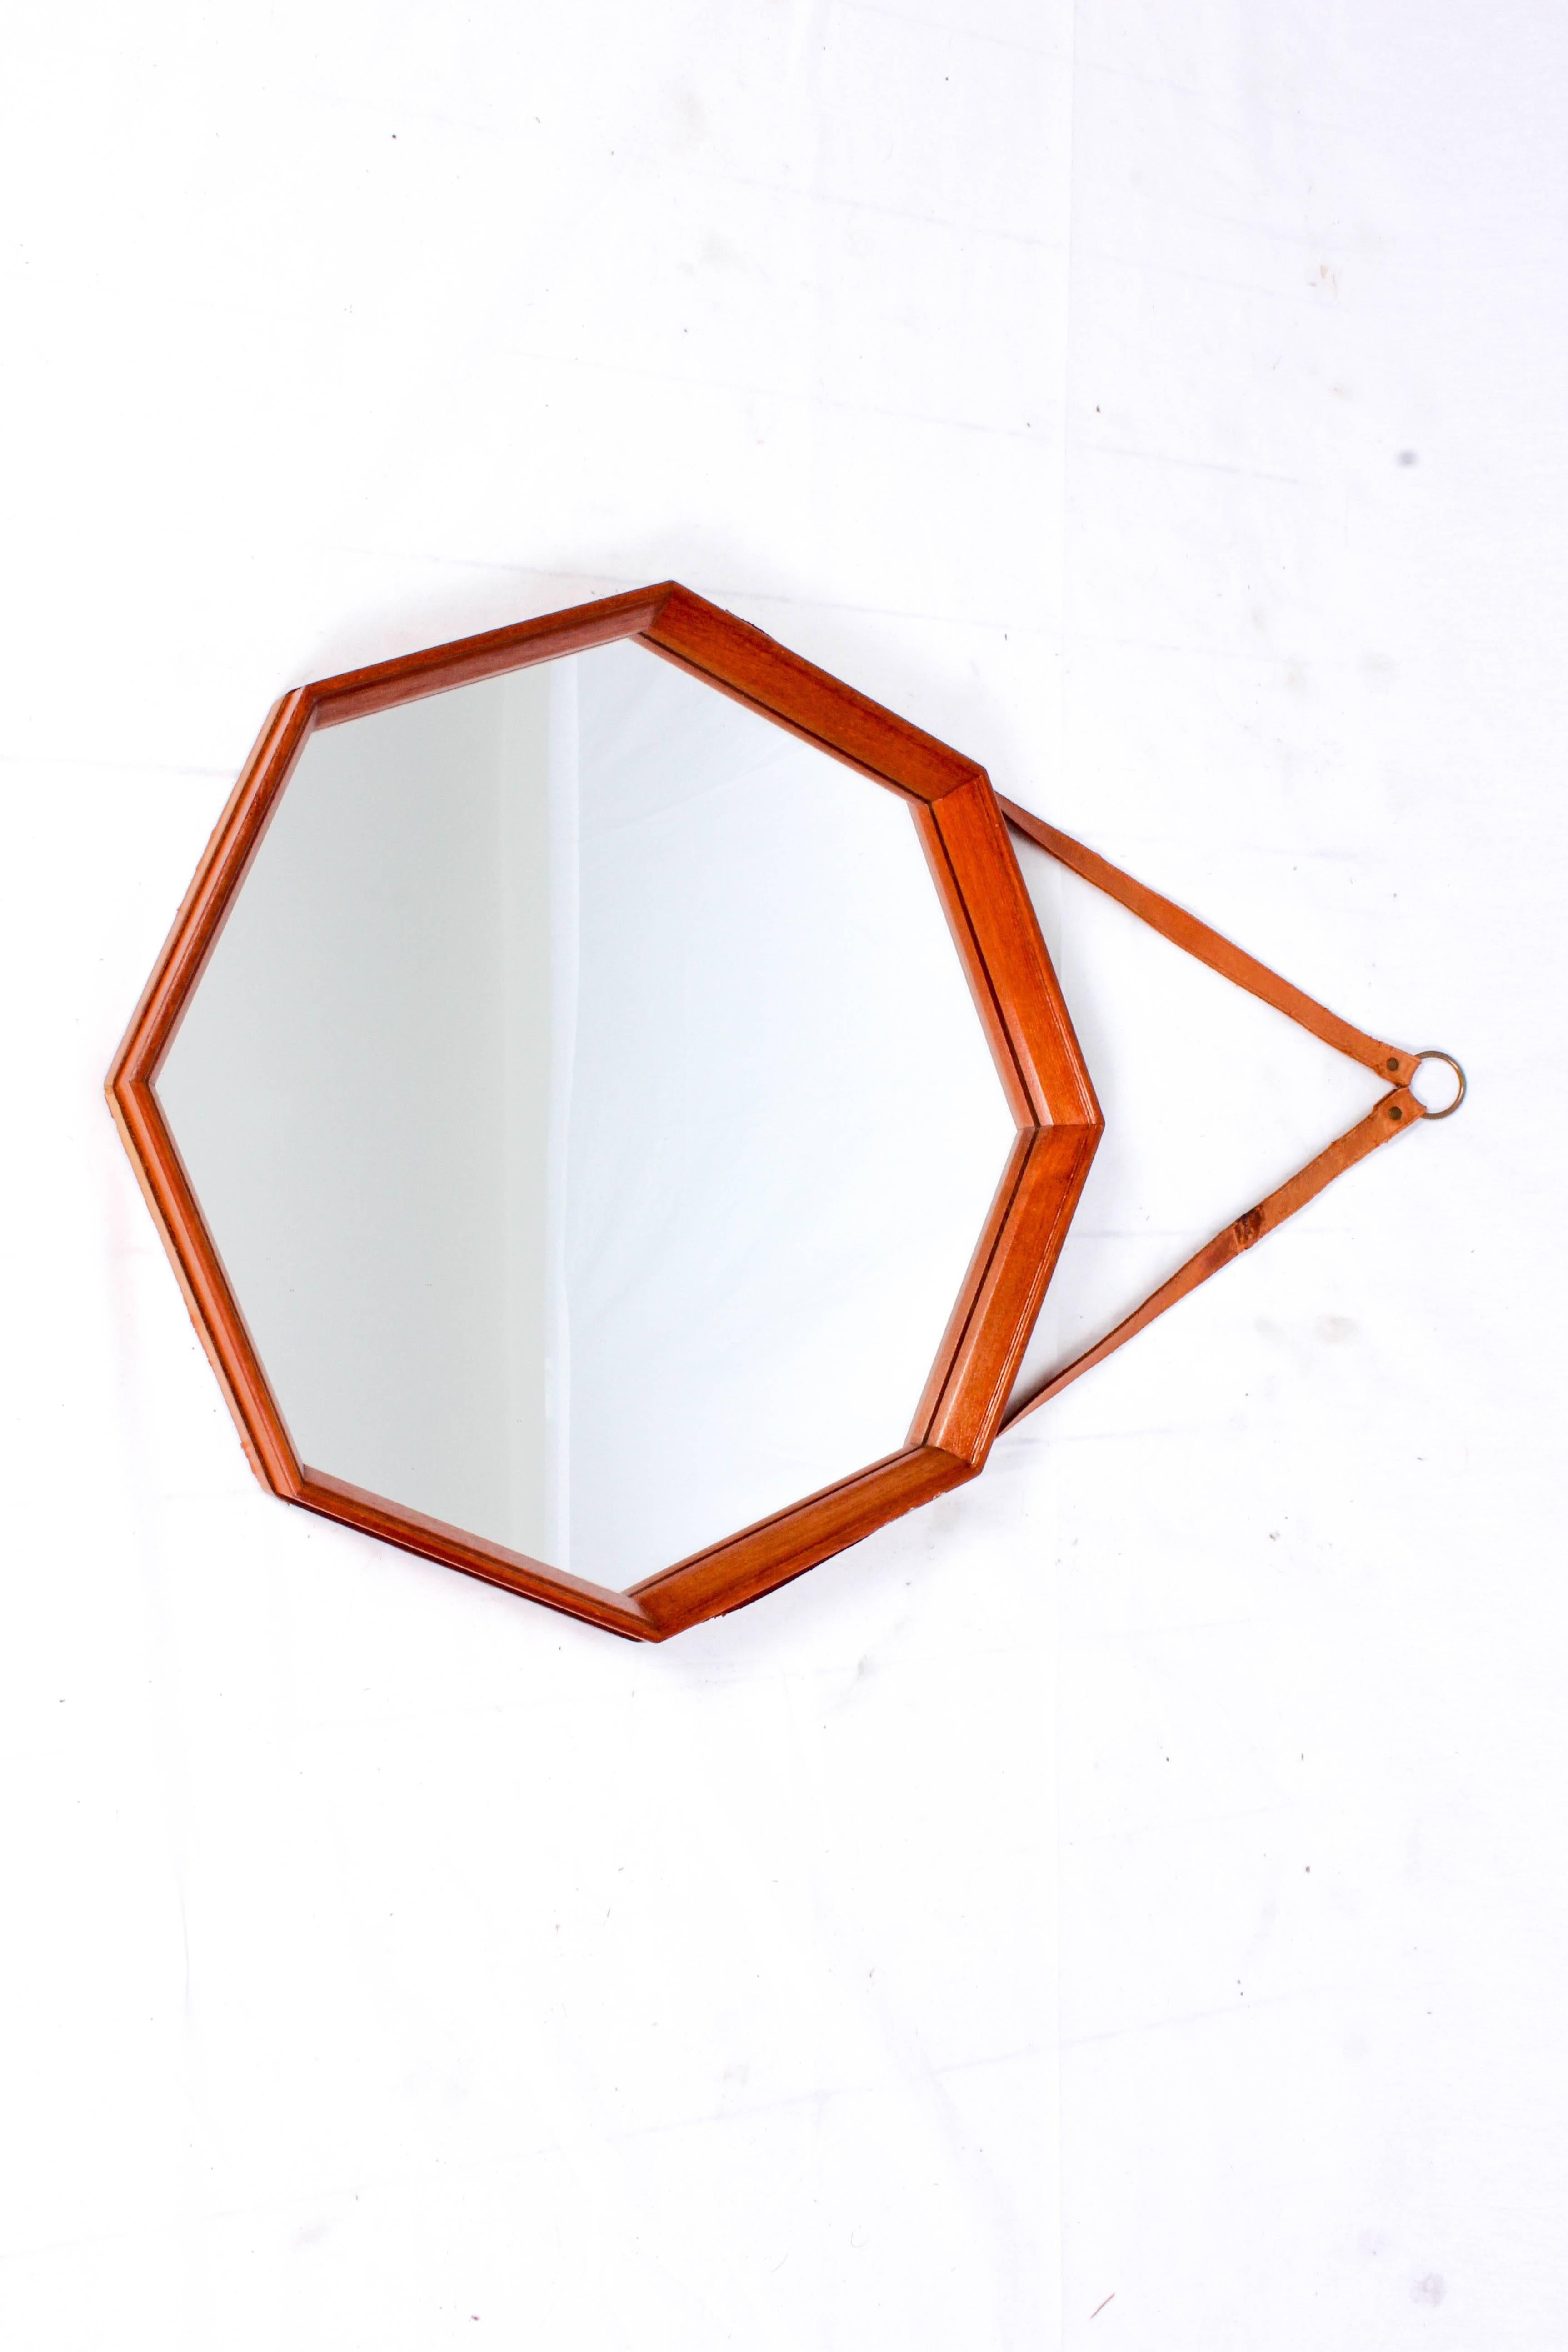 Scandinavian Modern Midcentury Swedish Octagonal Teak Mirror with Leather Strap